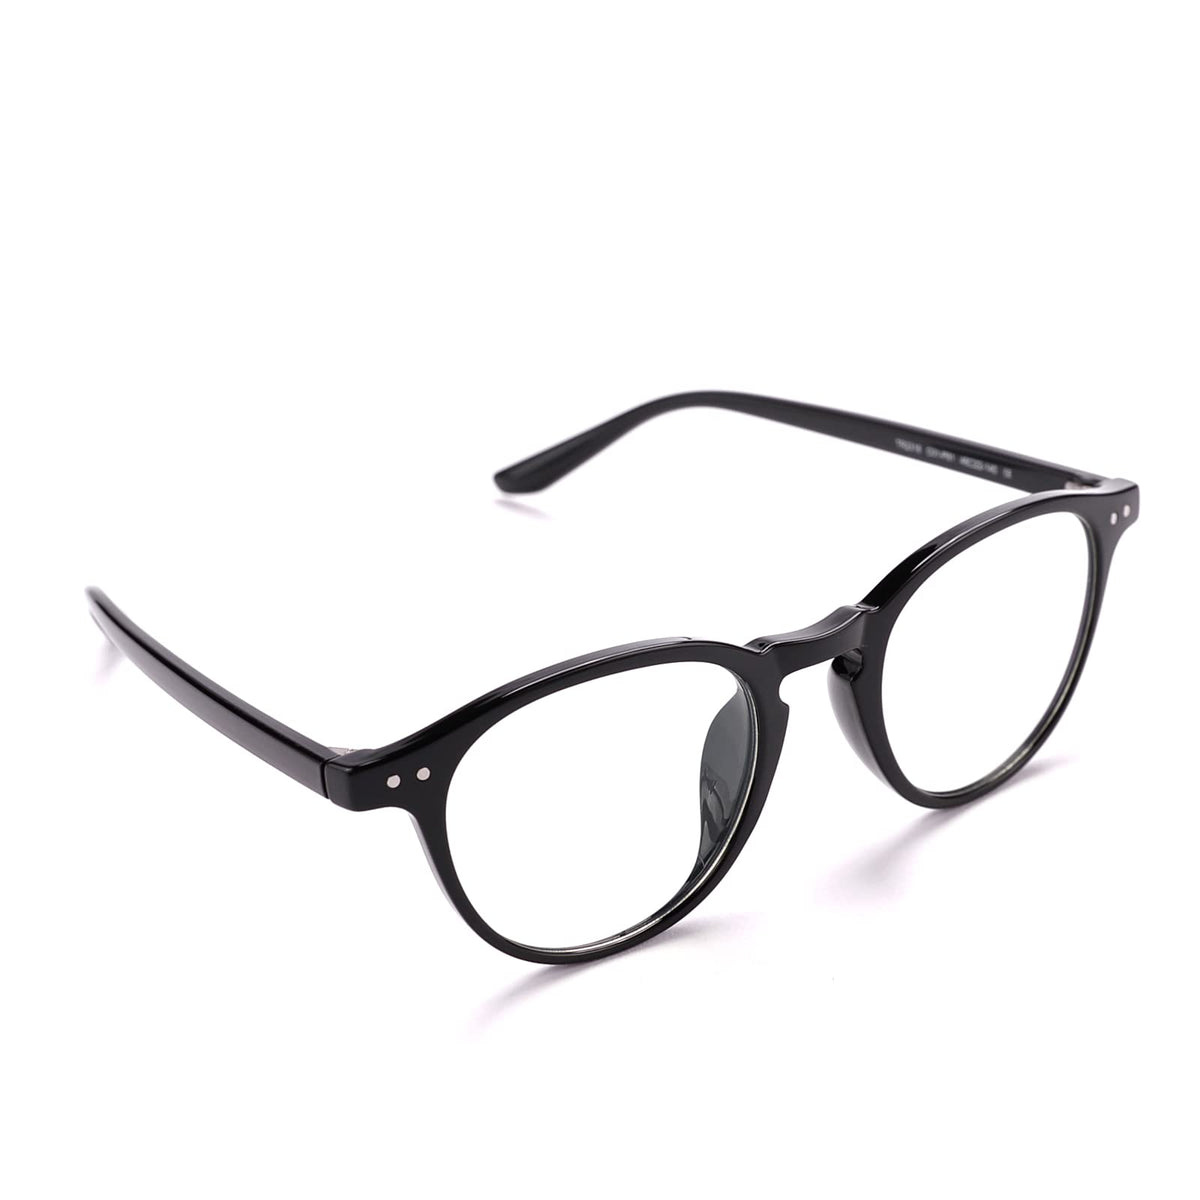 Intellilens Round Blue Cut Computer Glasses for Eye Protection | Zero Power, Anti Glare & Blue Light Filter Glasses | UV Protection Eye Glass for Men & Women (Black) (48-22-140)